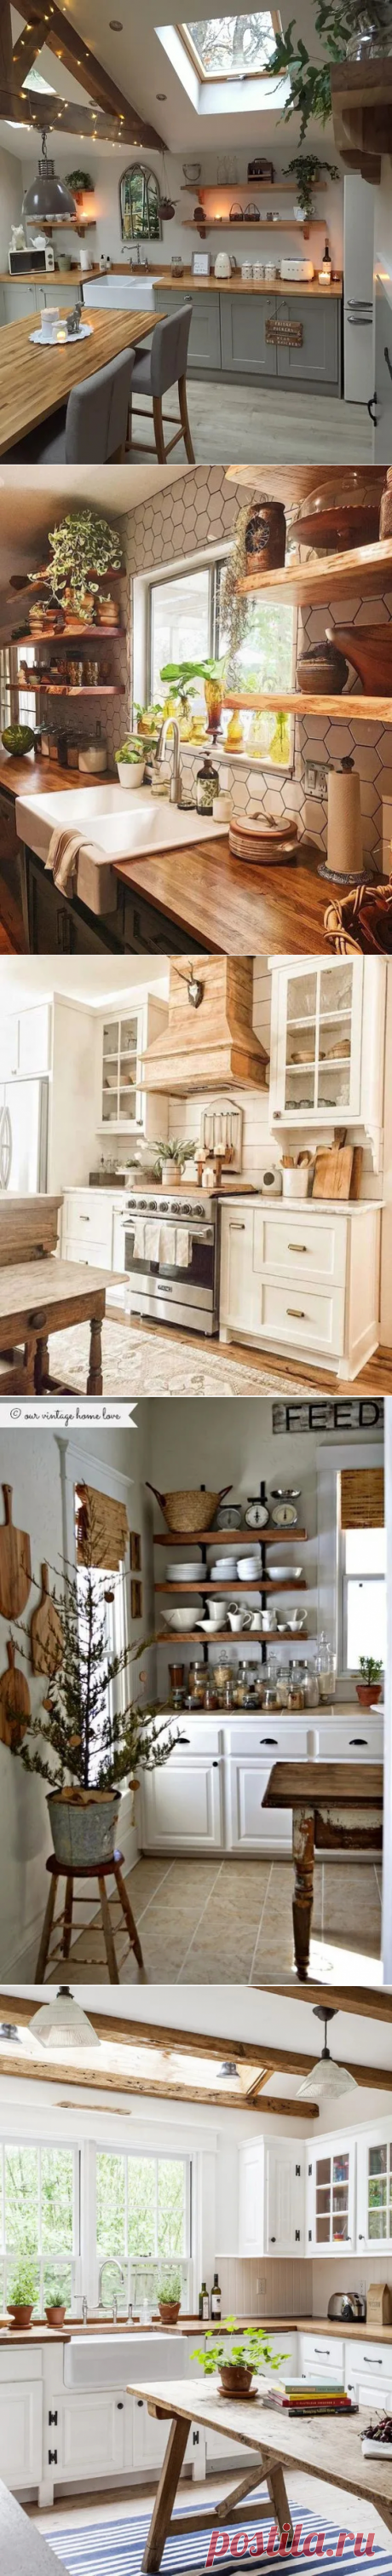 25 Farmhouse Kitchen Decor Ideas You'll Want to Copy